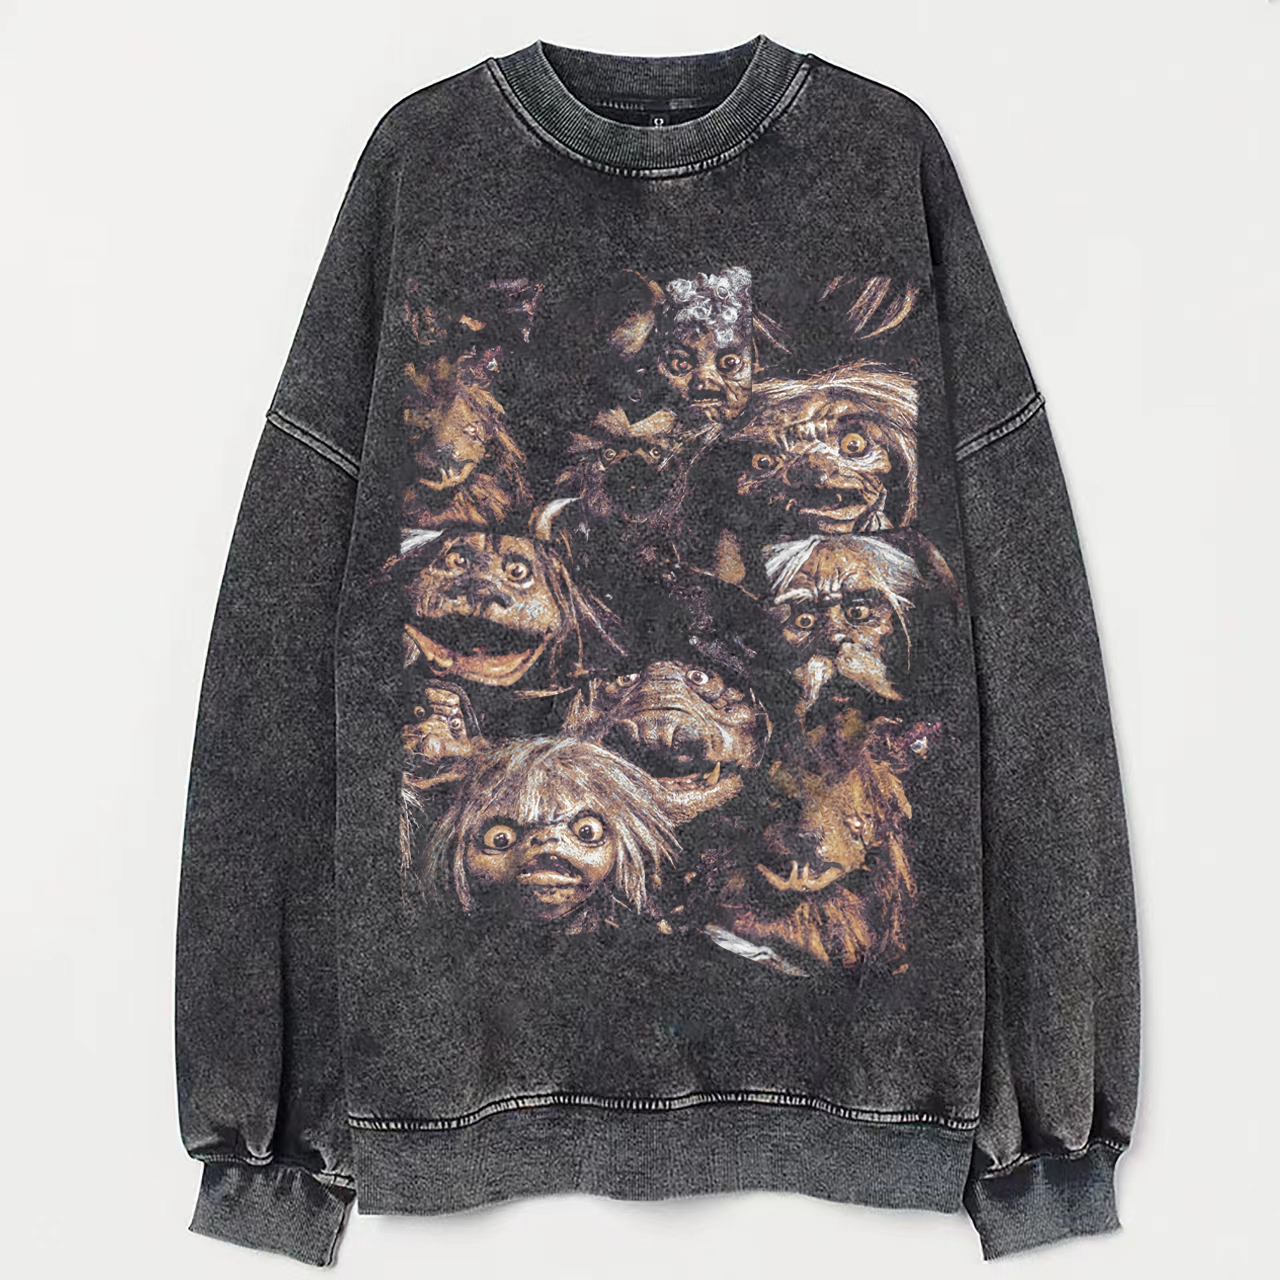 Labyrinth Goblins 1986 Vintage Fantasy Movie Sweatshirt/Shirt